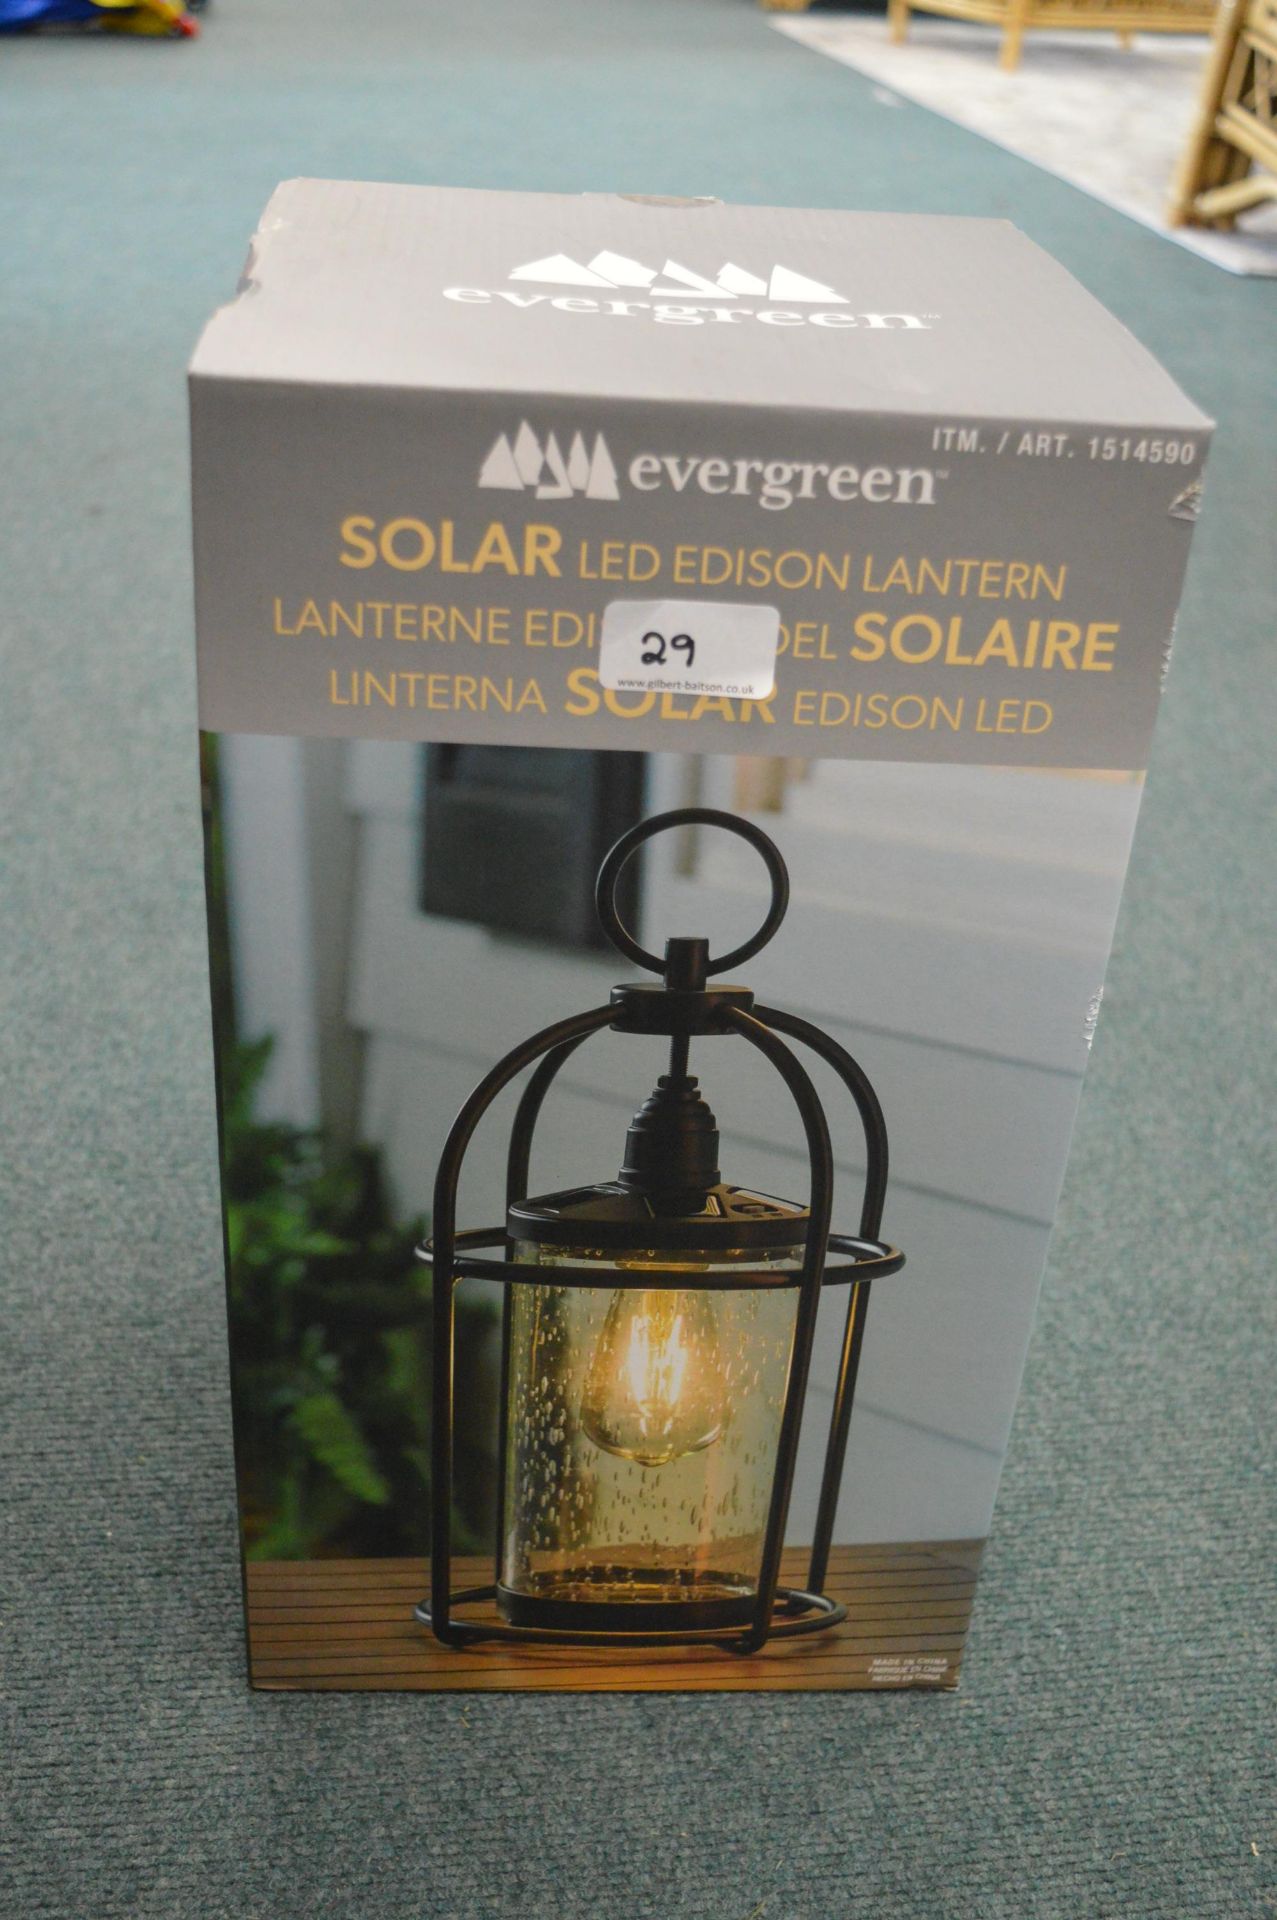 *Evergreen Solar LED Edison Lantern